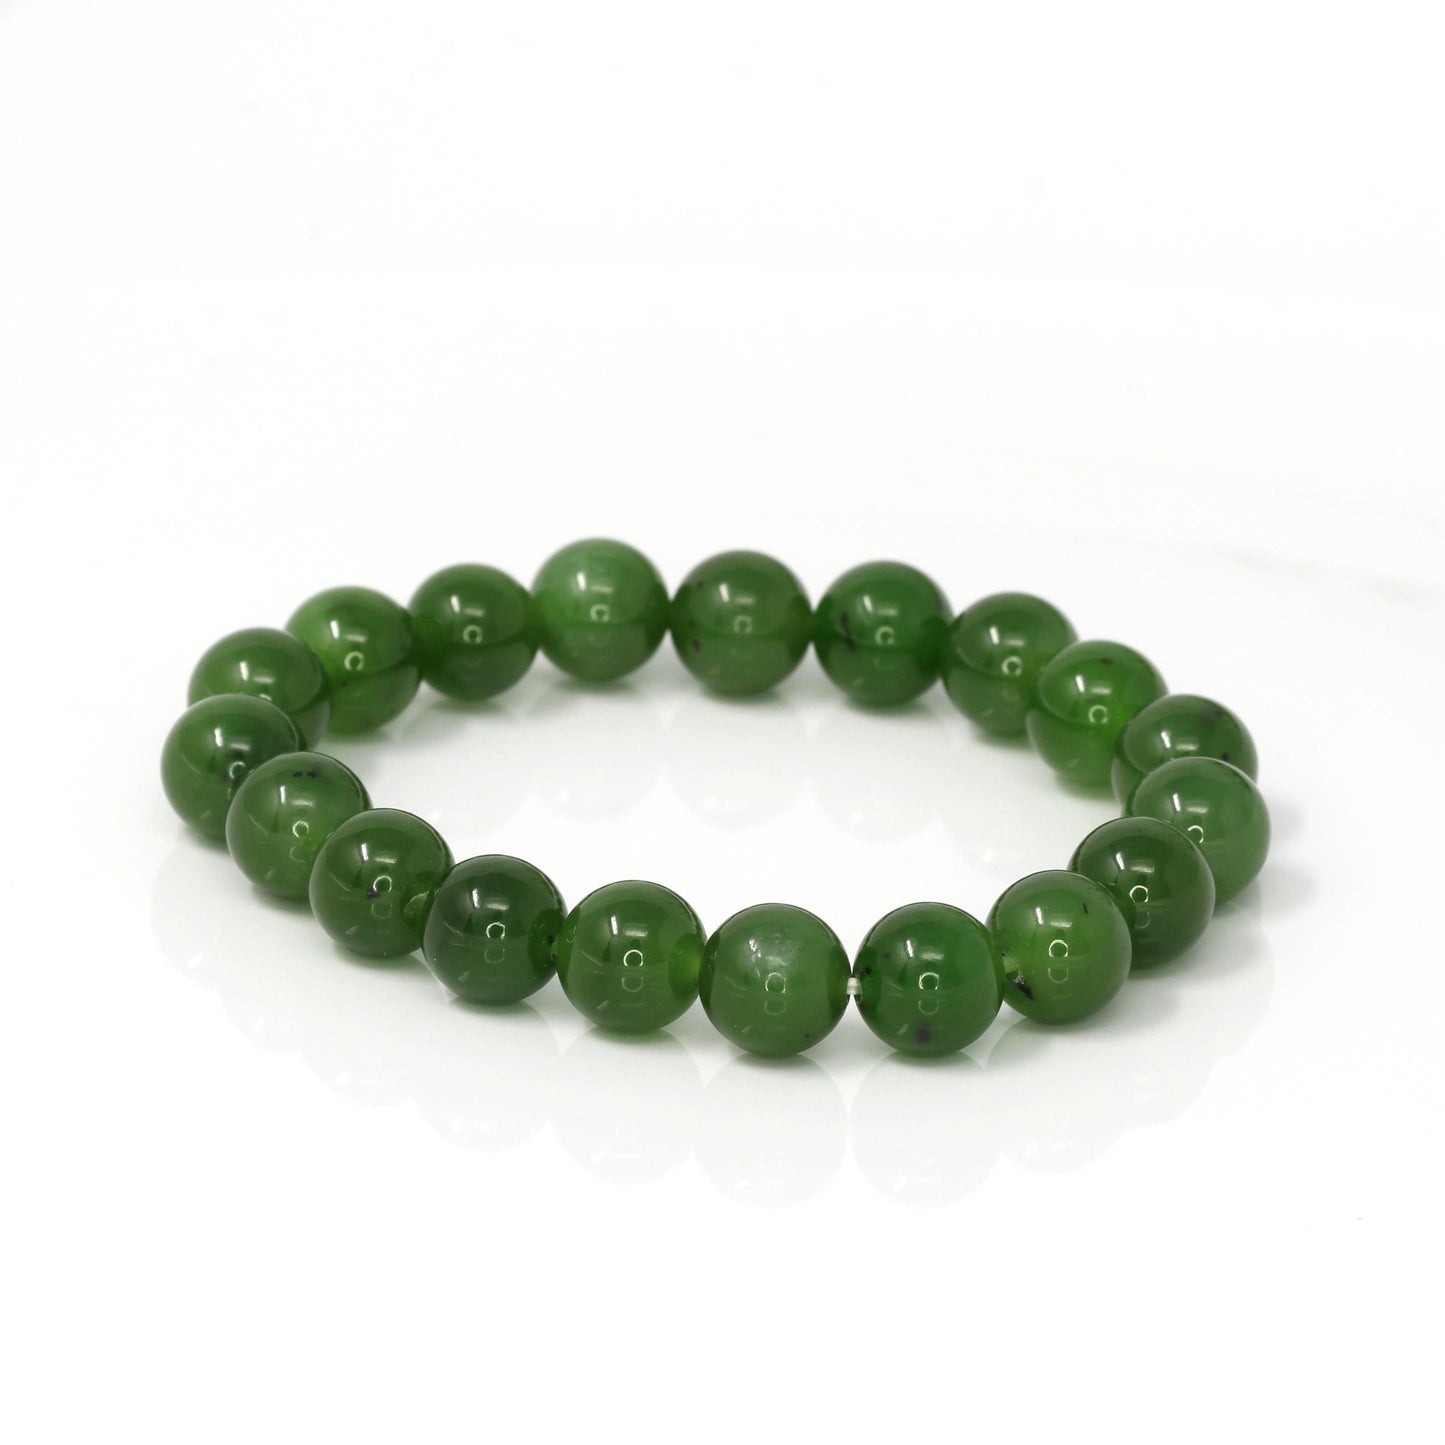 RealJade "Classic Bangle" Genuine Burmese High Quality Apple Green Jadeite Jade Bangle Bracelet (53.4mm) #544